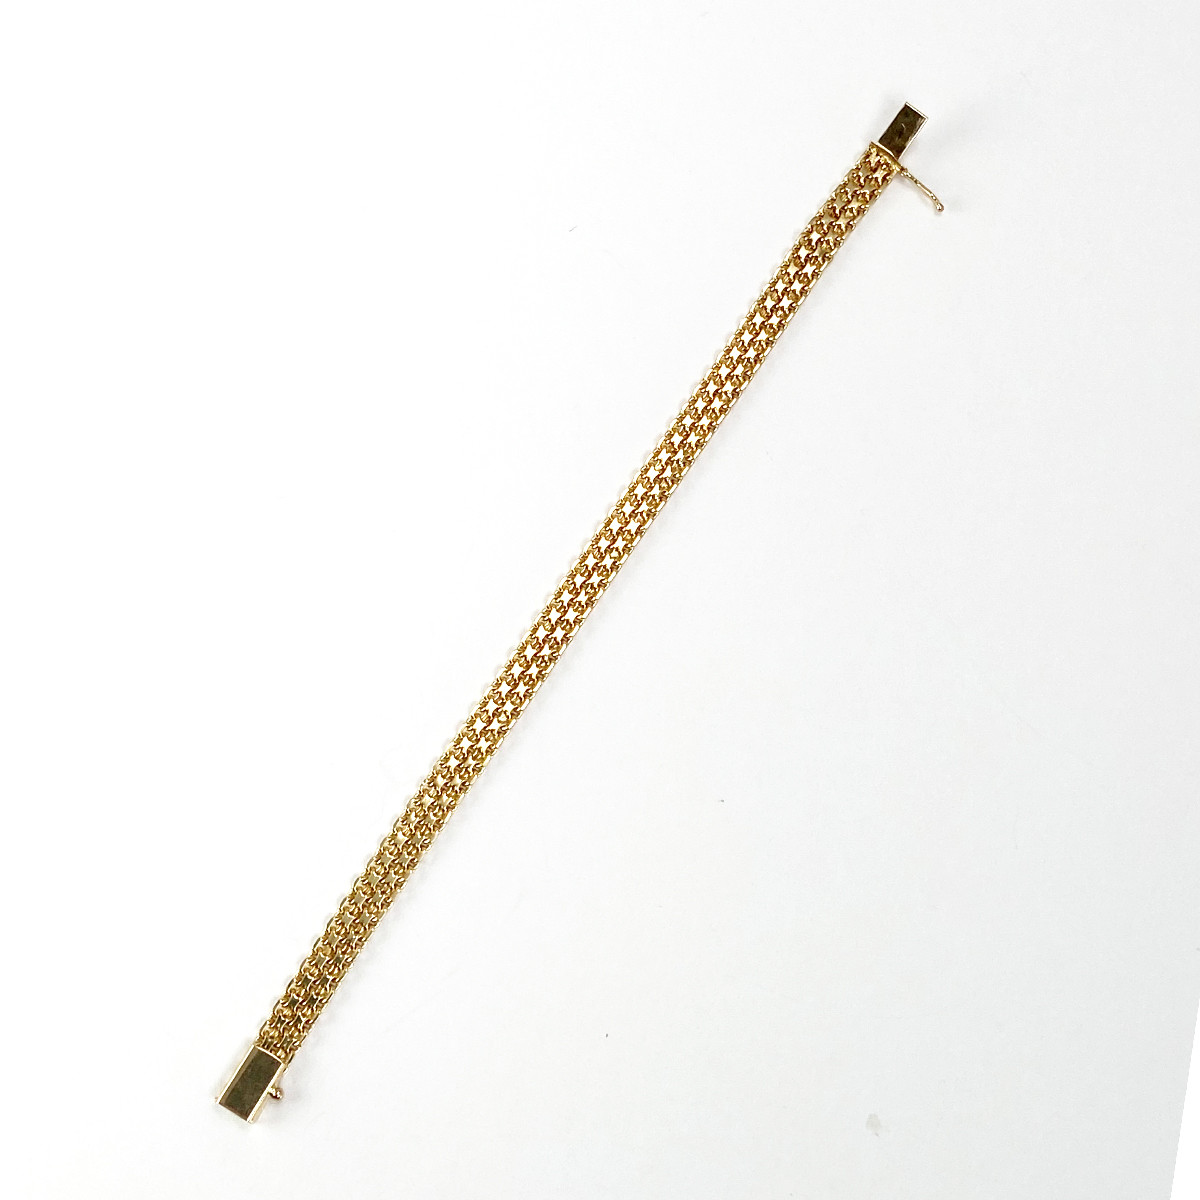 Bracelet d'occasion or 750 jaune maille fantaisie 18 cm - vue 3